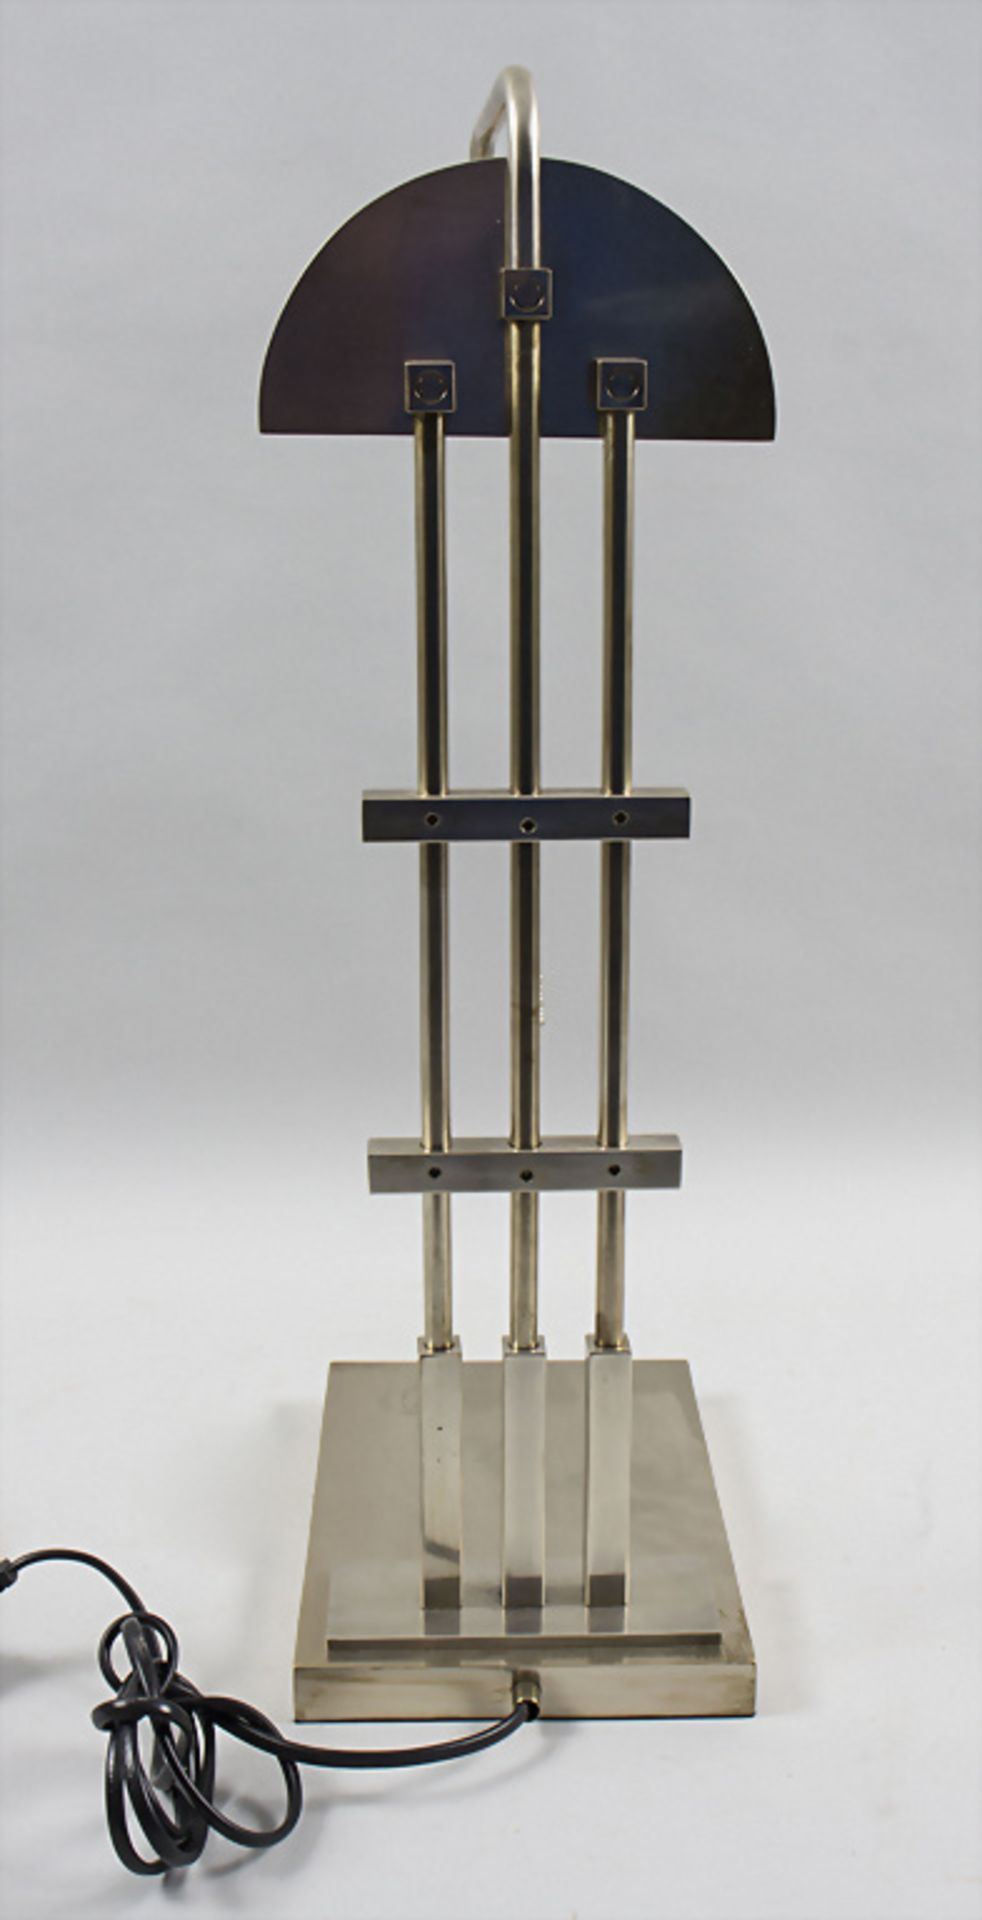 Bauhaus-Design Tischlampe / A Bauhaus design desk lamp, Entwurf um 1925 - Image 4 of 8